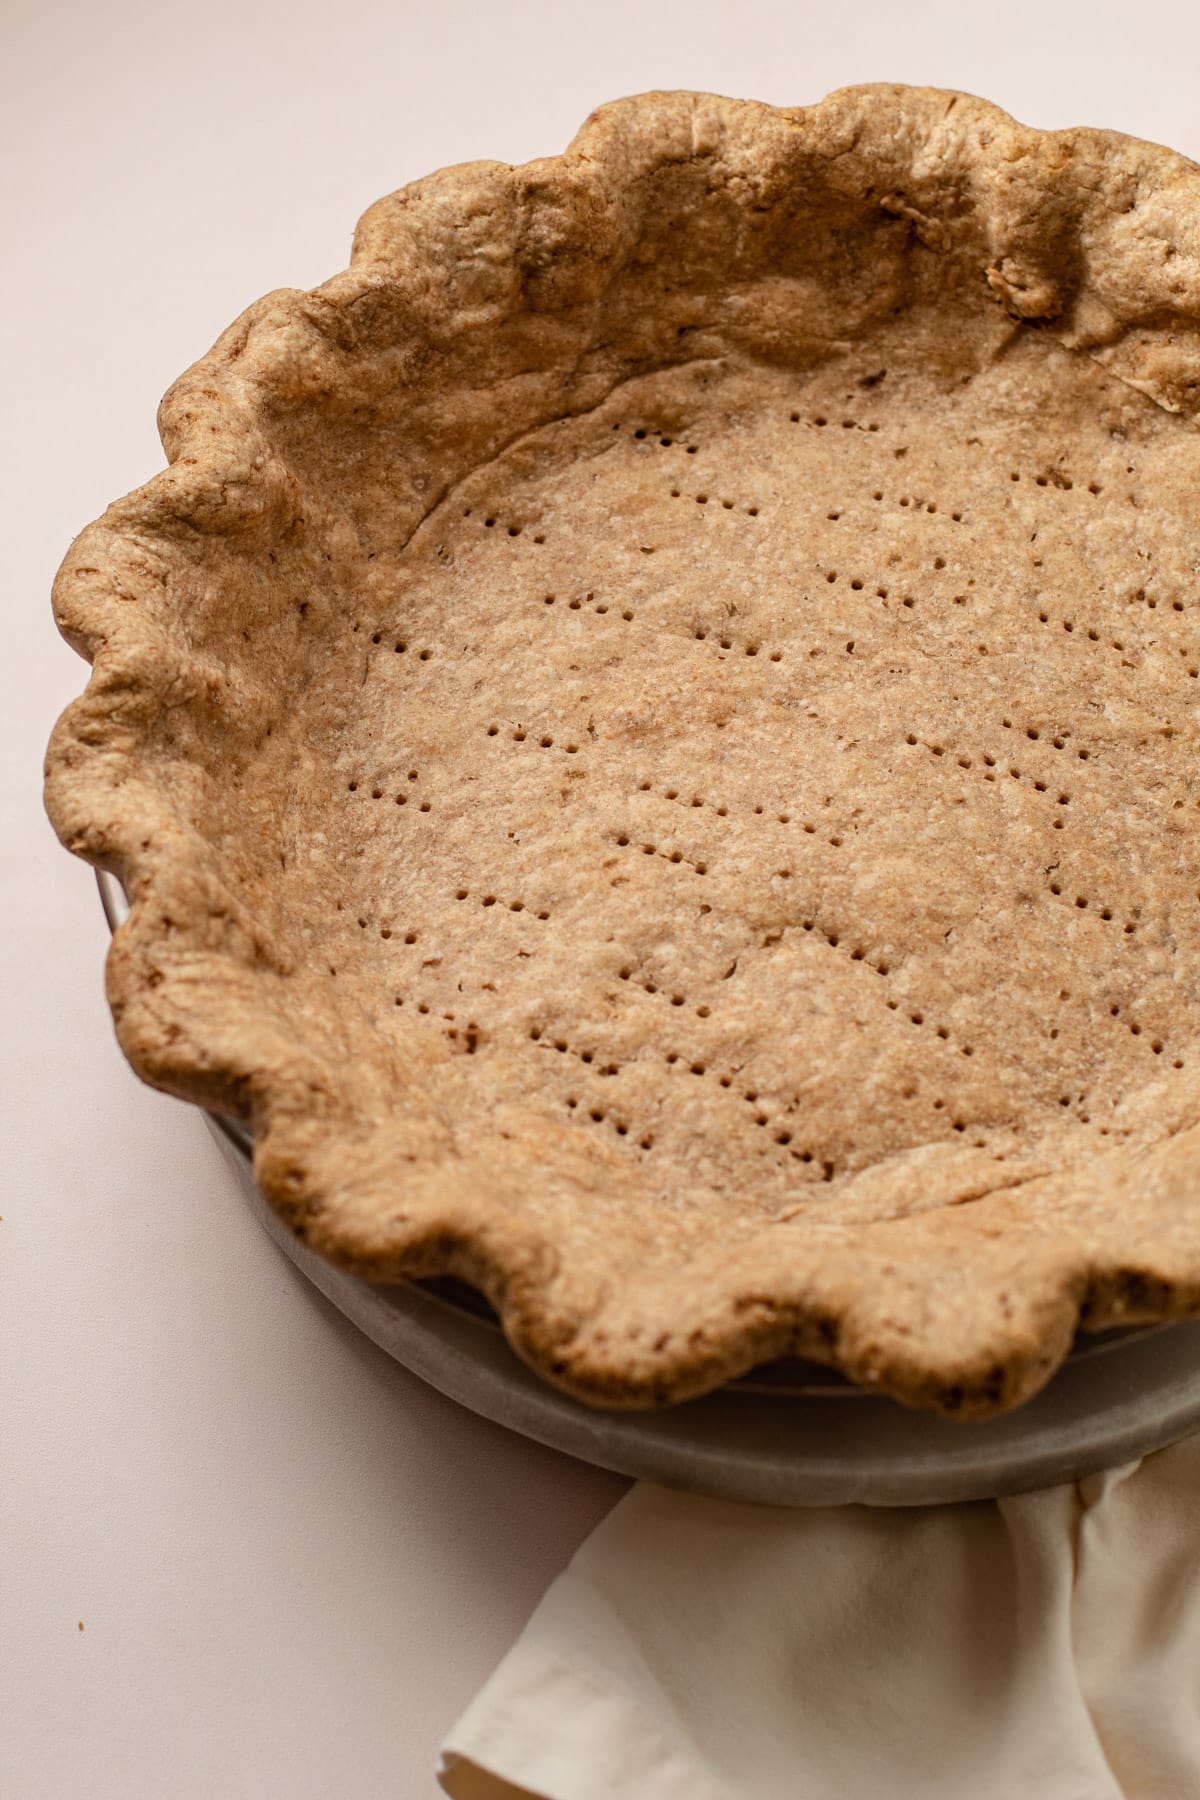 Spelt flour pie crust fully baked but not filled.